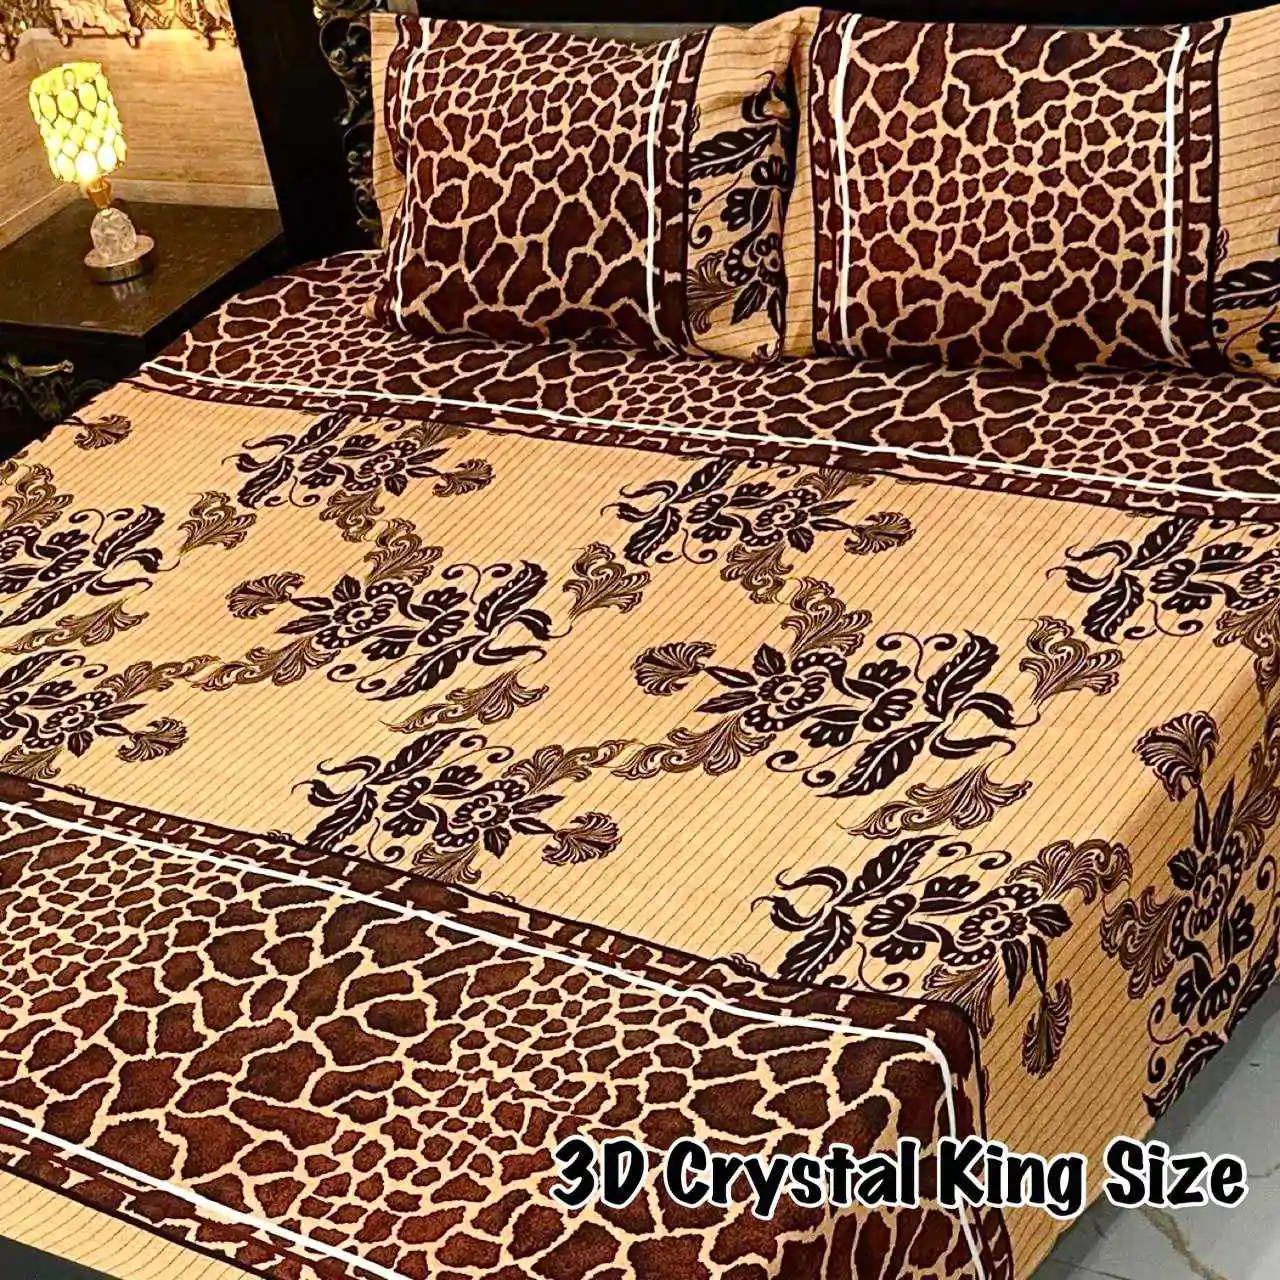 DF-CBSKS-15: DFY Bedding 3D Crystal Bed Sheet King Size